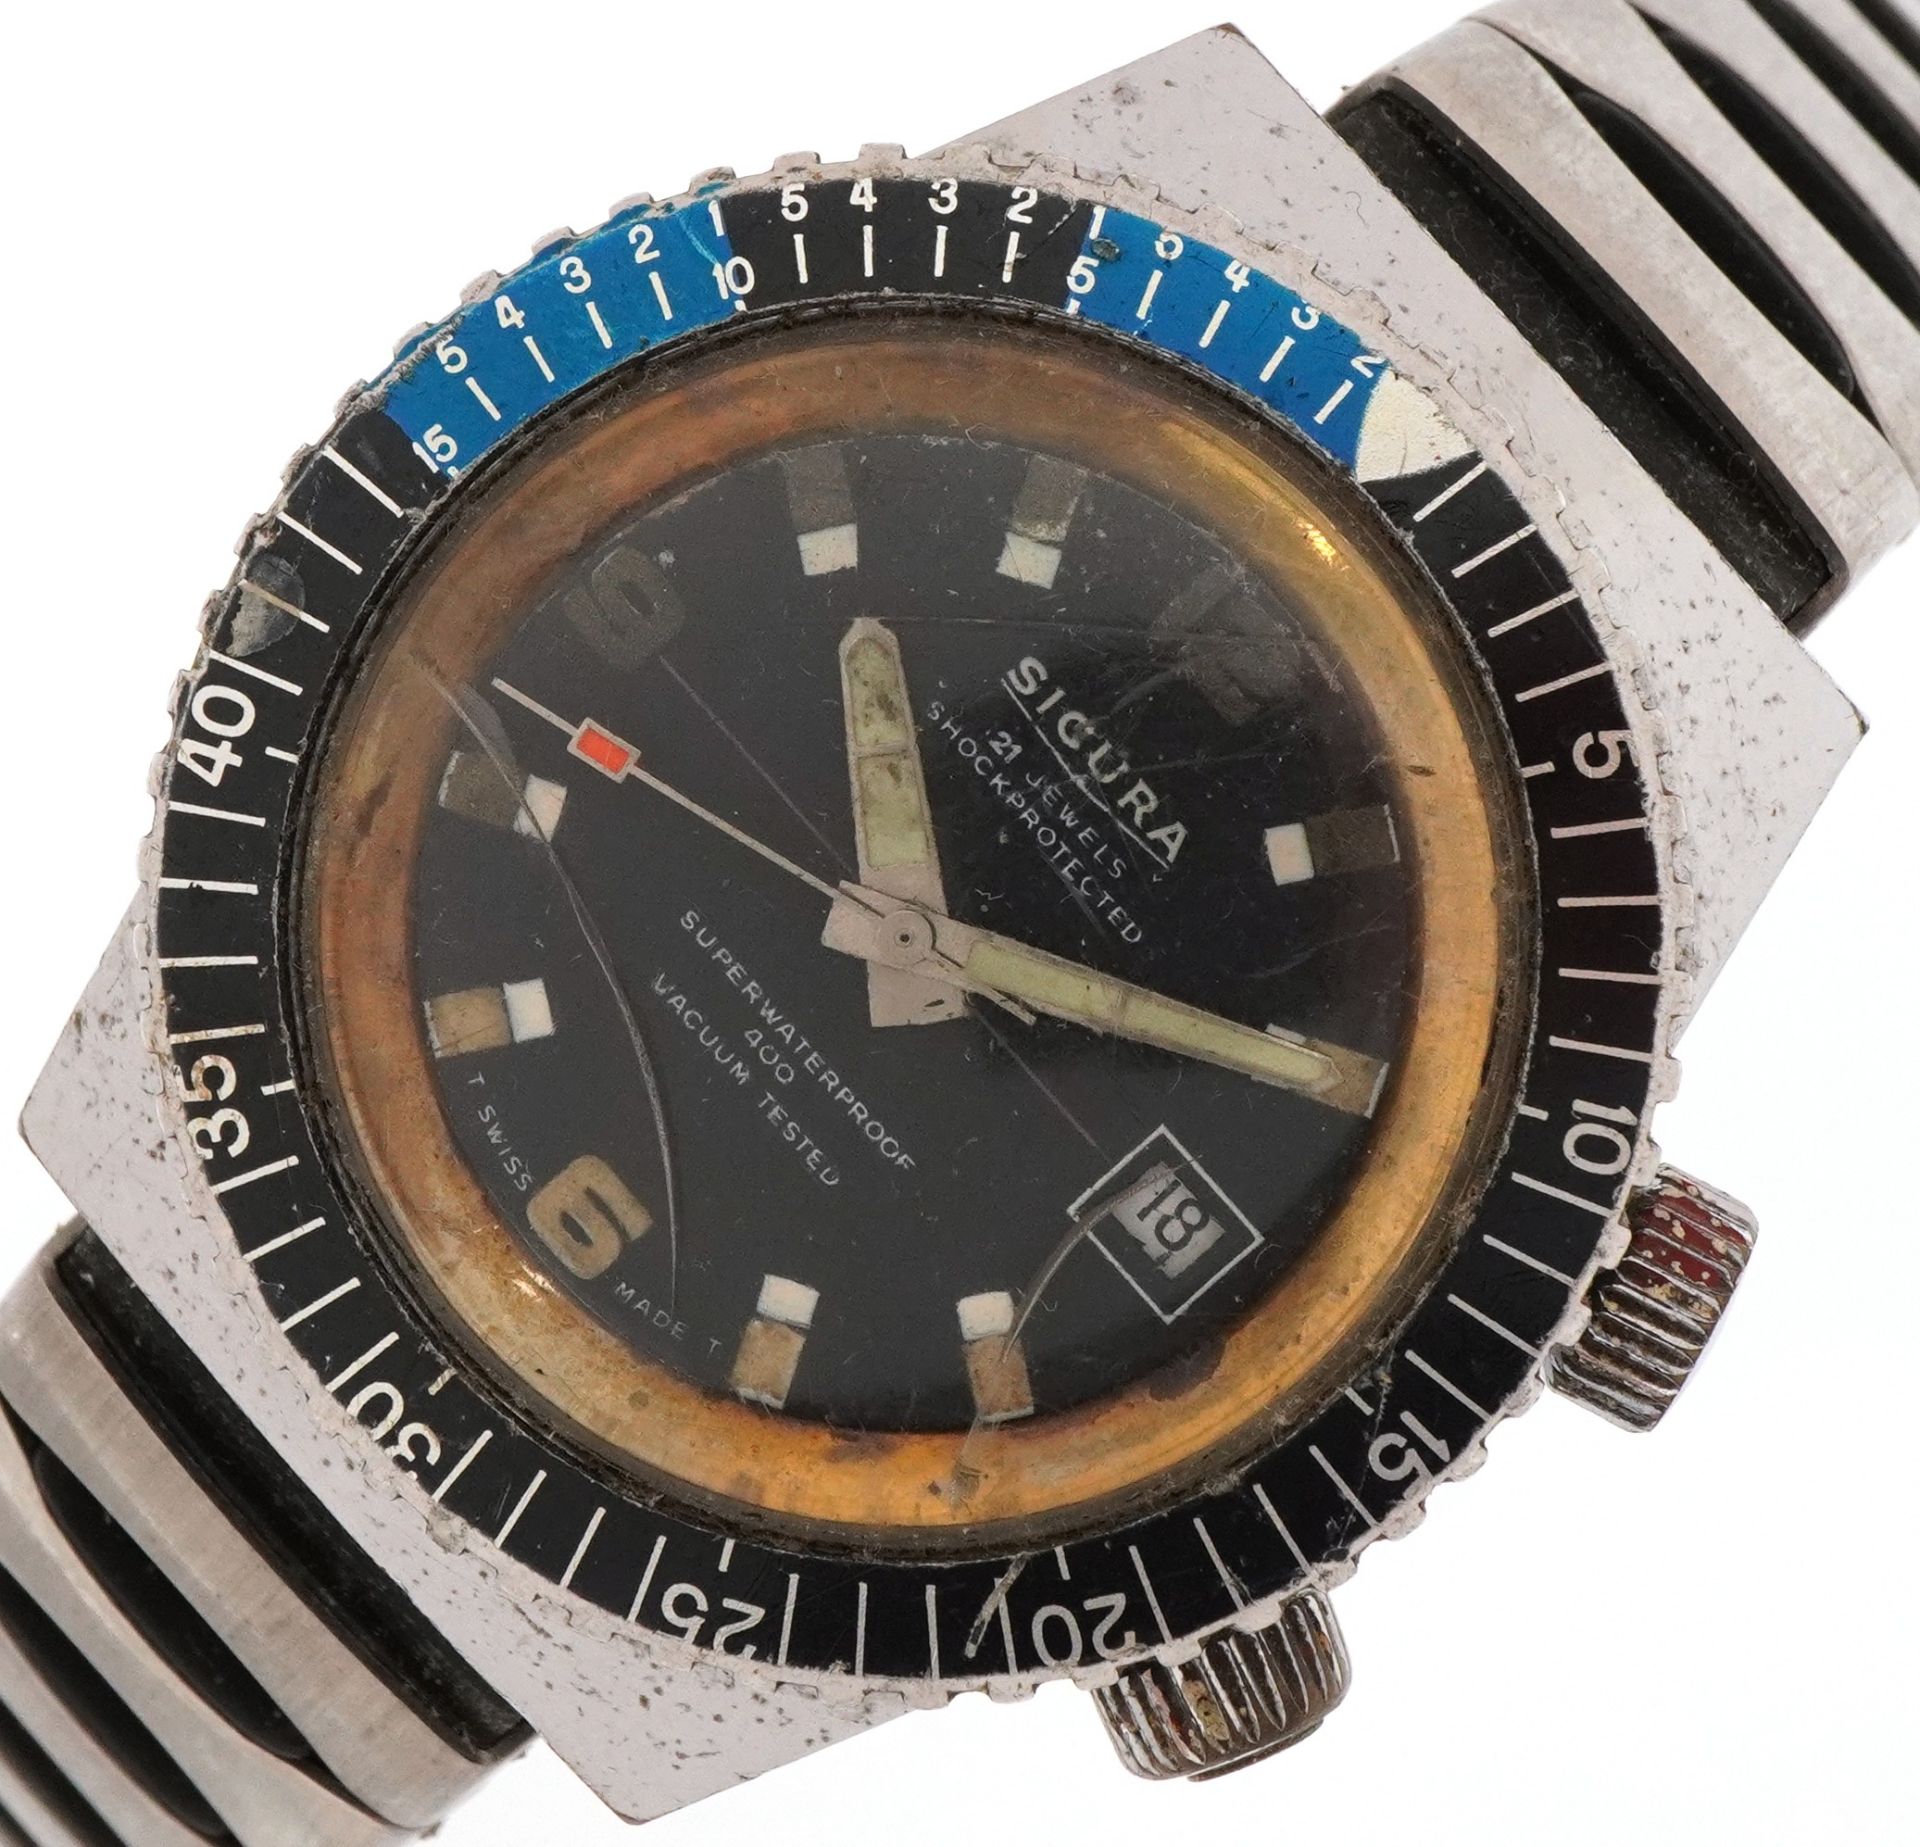 Sicura, gentlemen's manual wind wristwatch having black dial with date aperture, 40mm in diameter